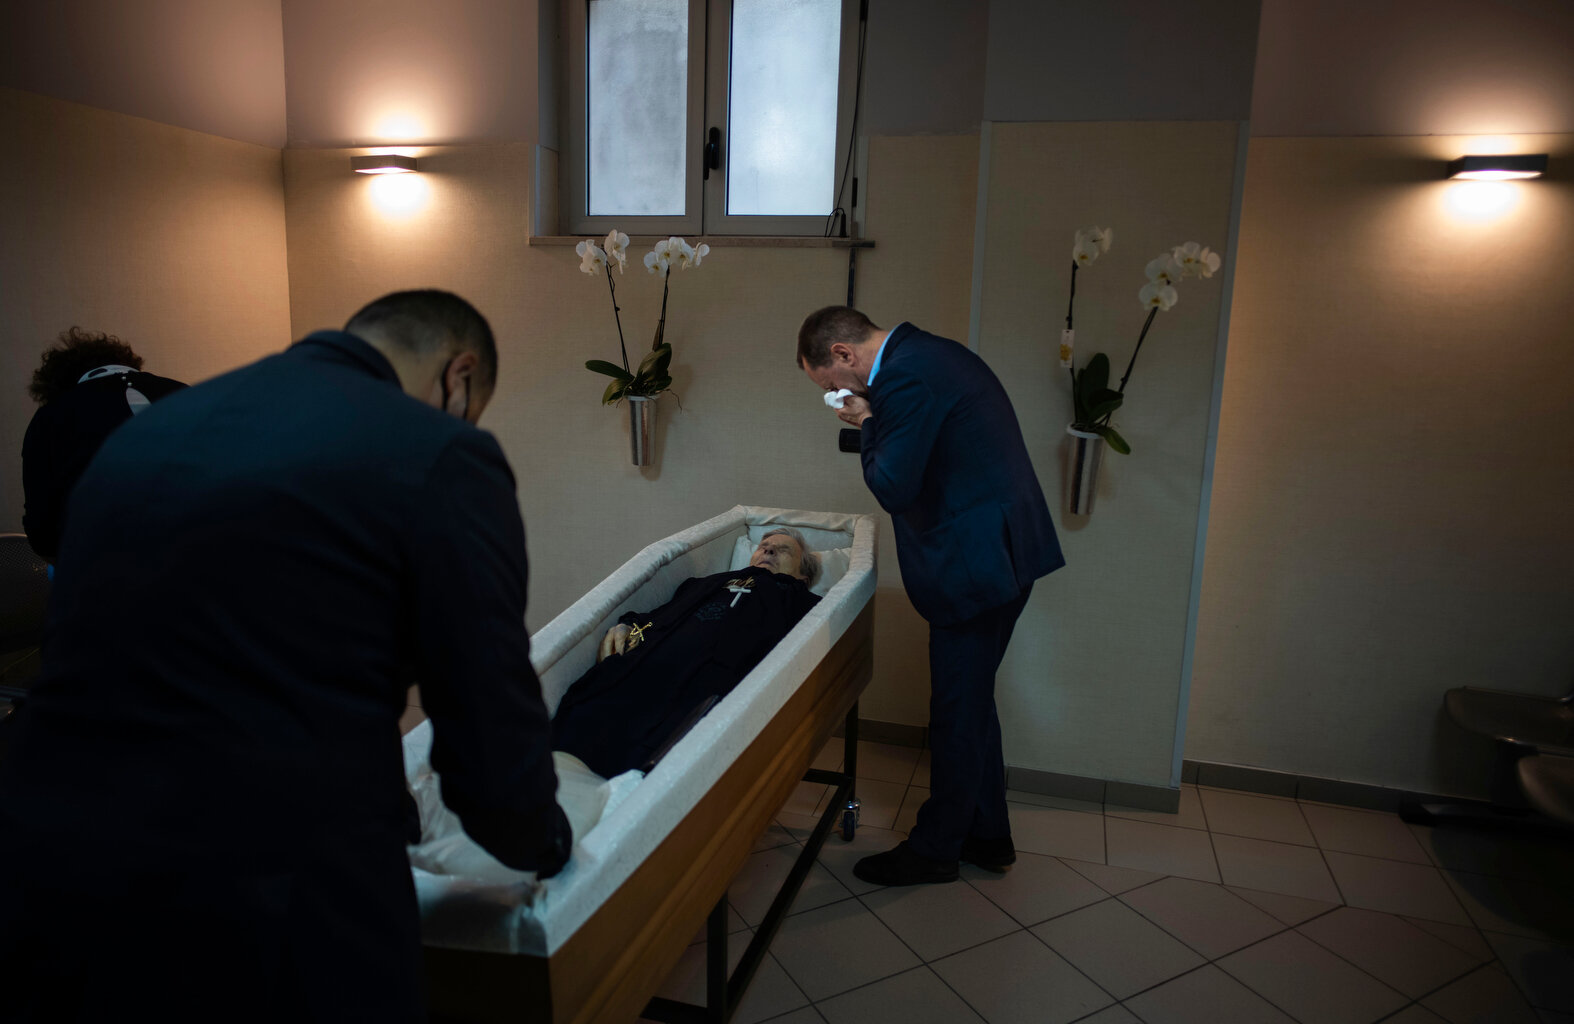  Sabatino Di Girolamo, right, mayor of Roseto degli Abruzzi mourns his mother Annunziata, laid in state in the morgue of the Giuseppe Mazzini Hospital in Teramo, central Italy, Tuesday, May 12, 2020. (AP Photo/Domenico Stinellis) 